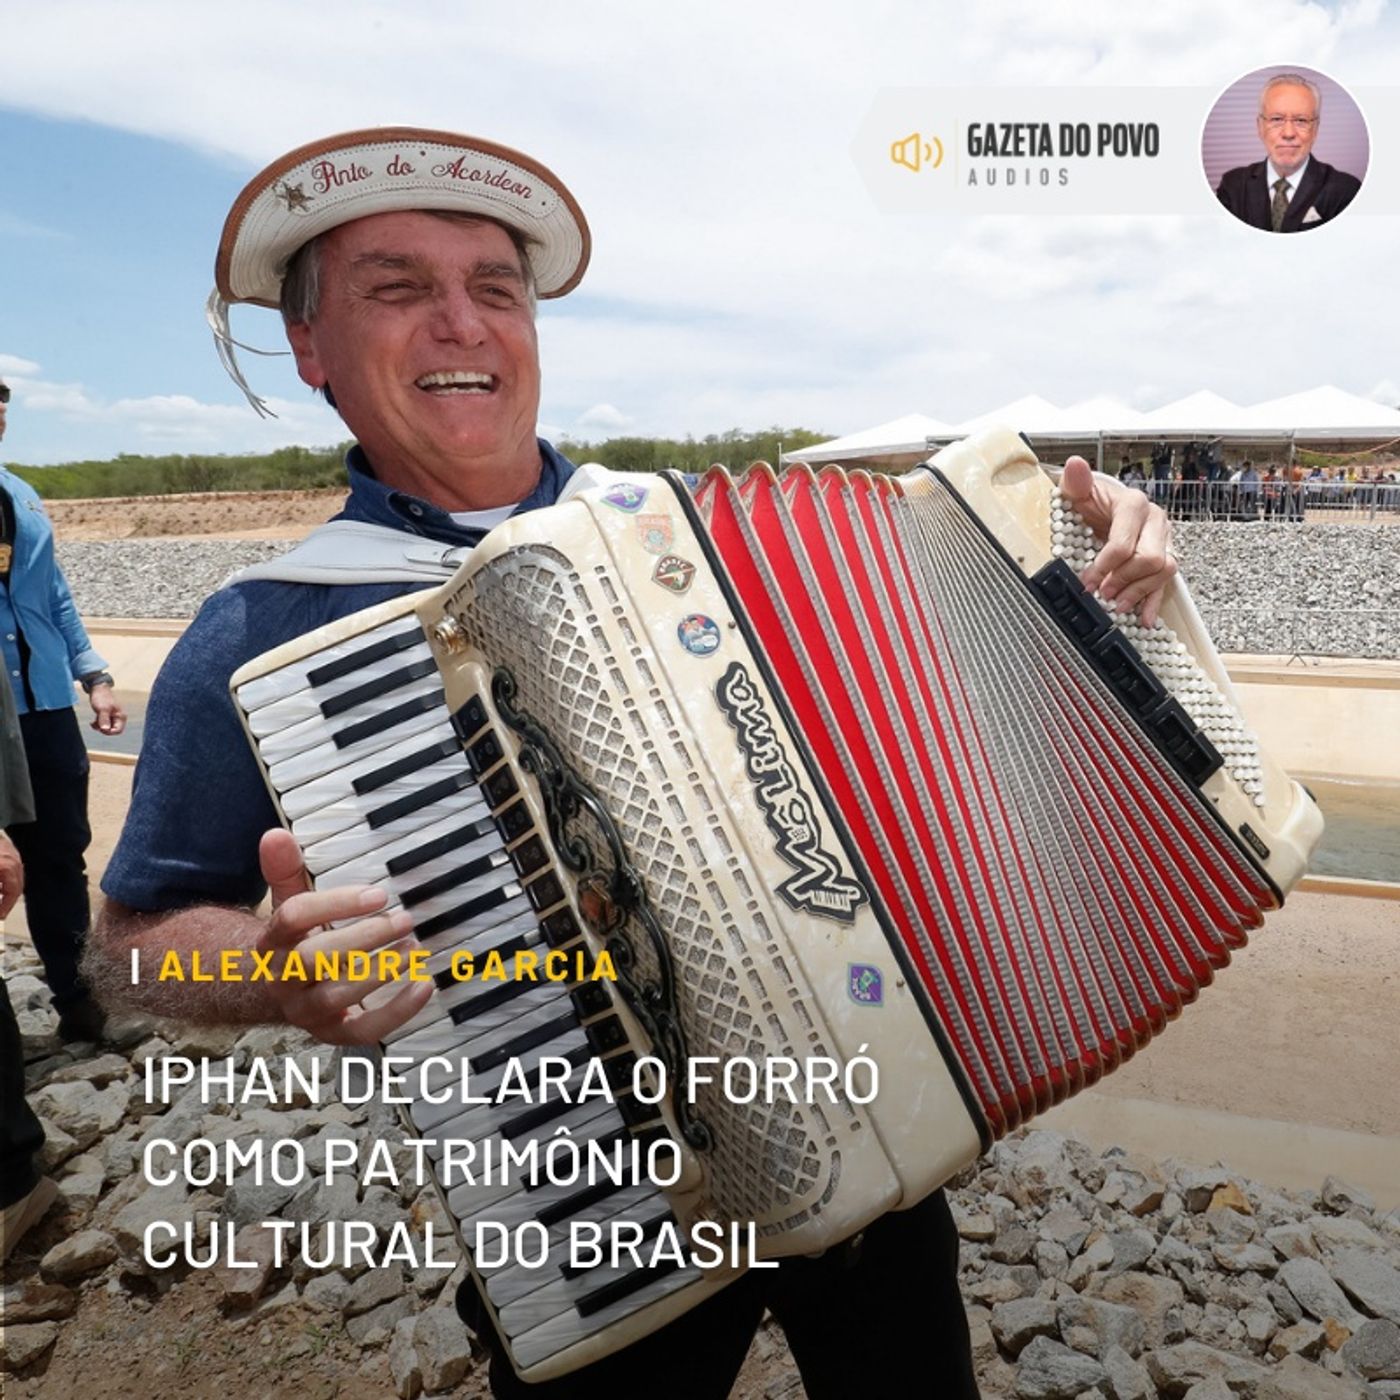 Iphan declara o forró patrimônio cultural do Brasil